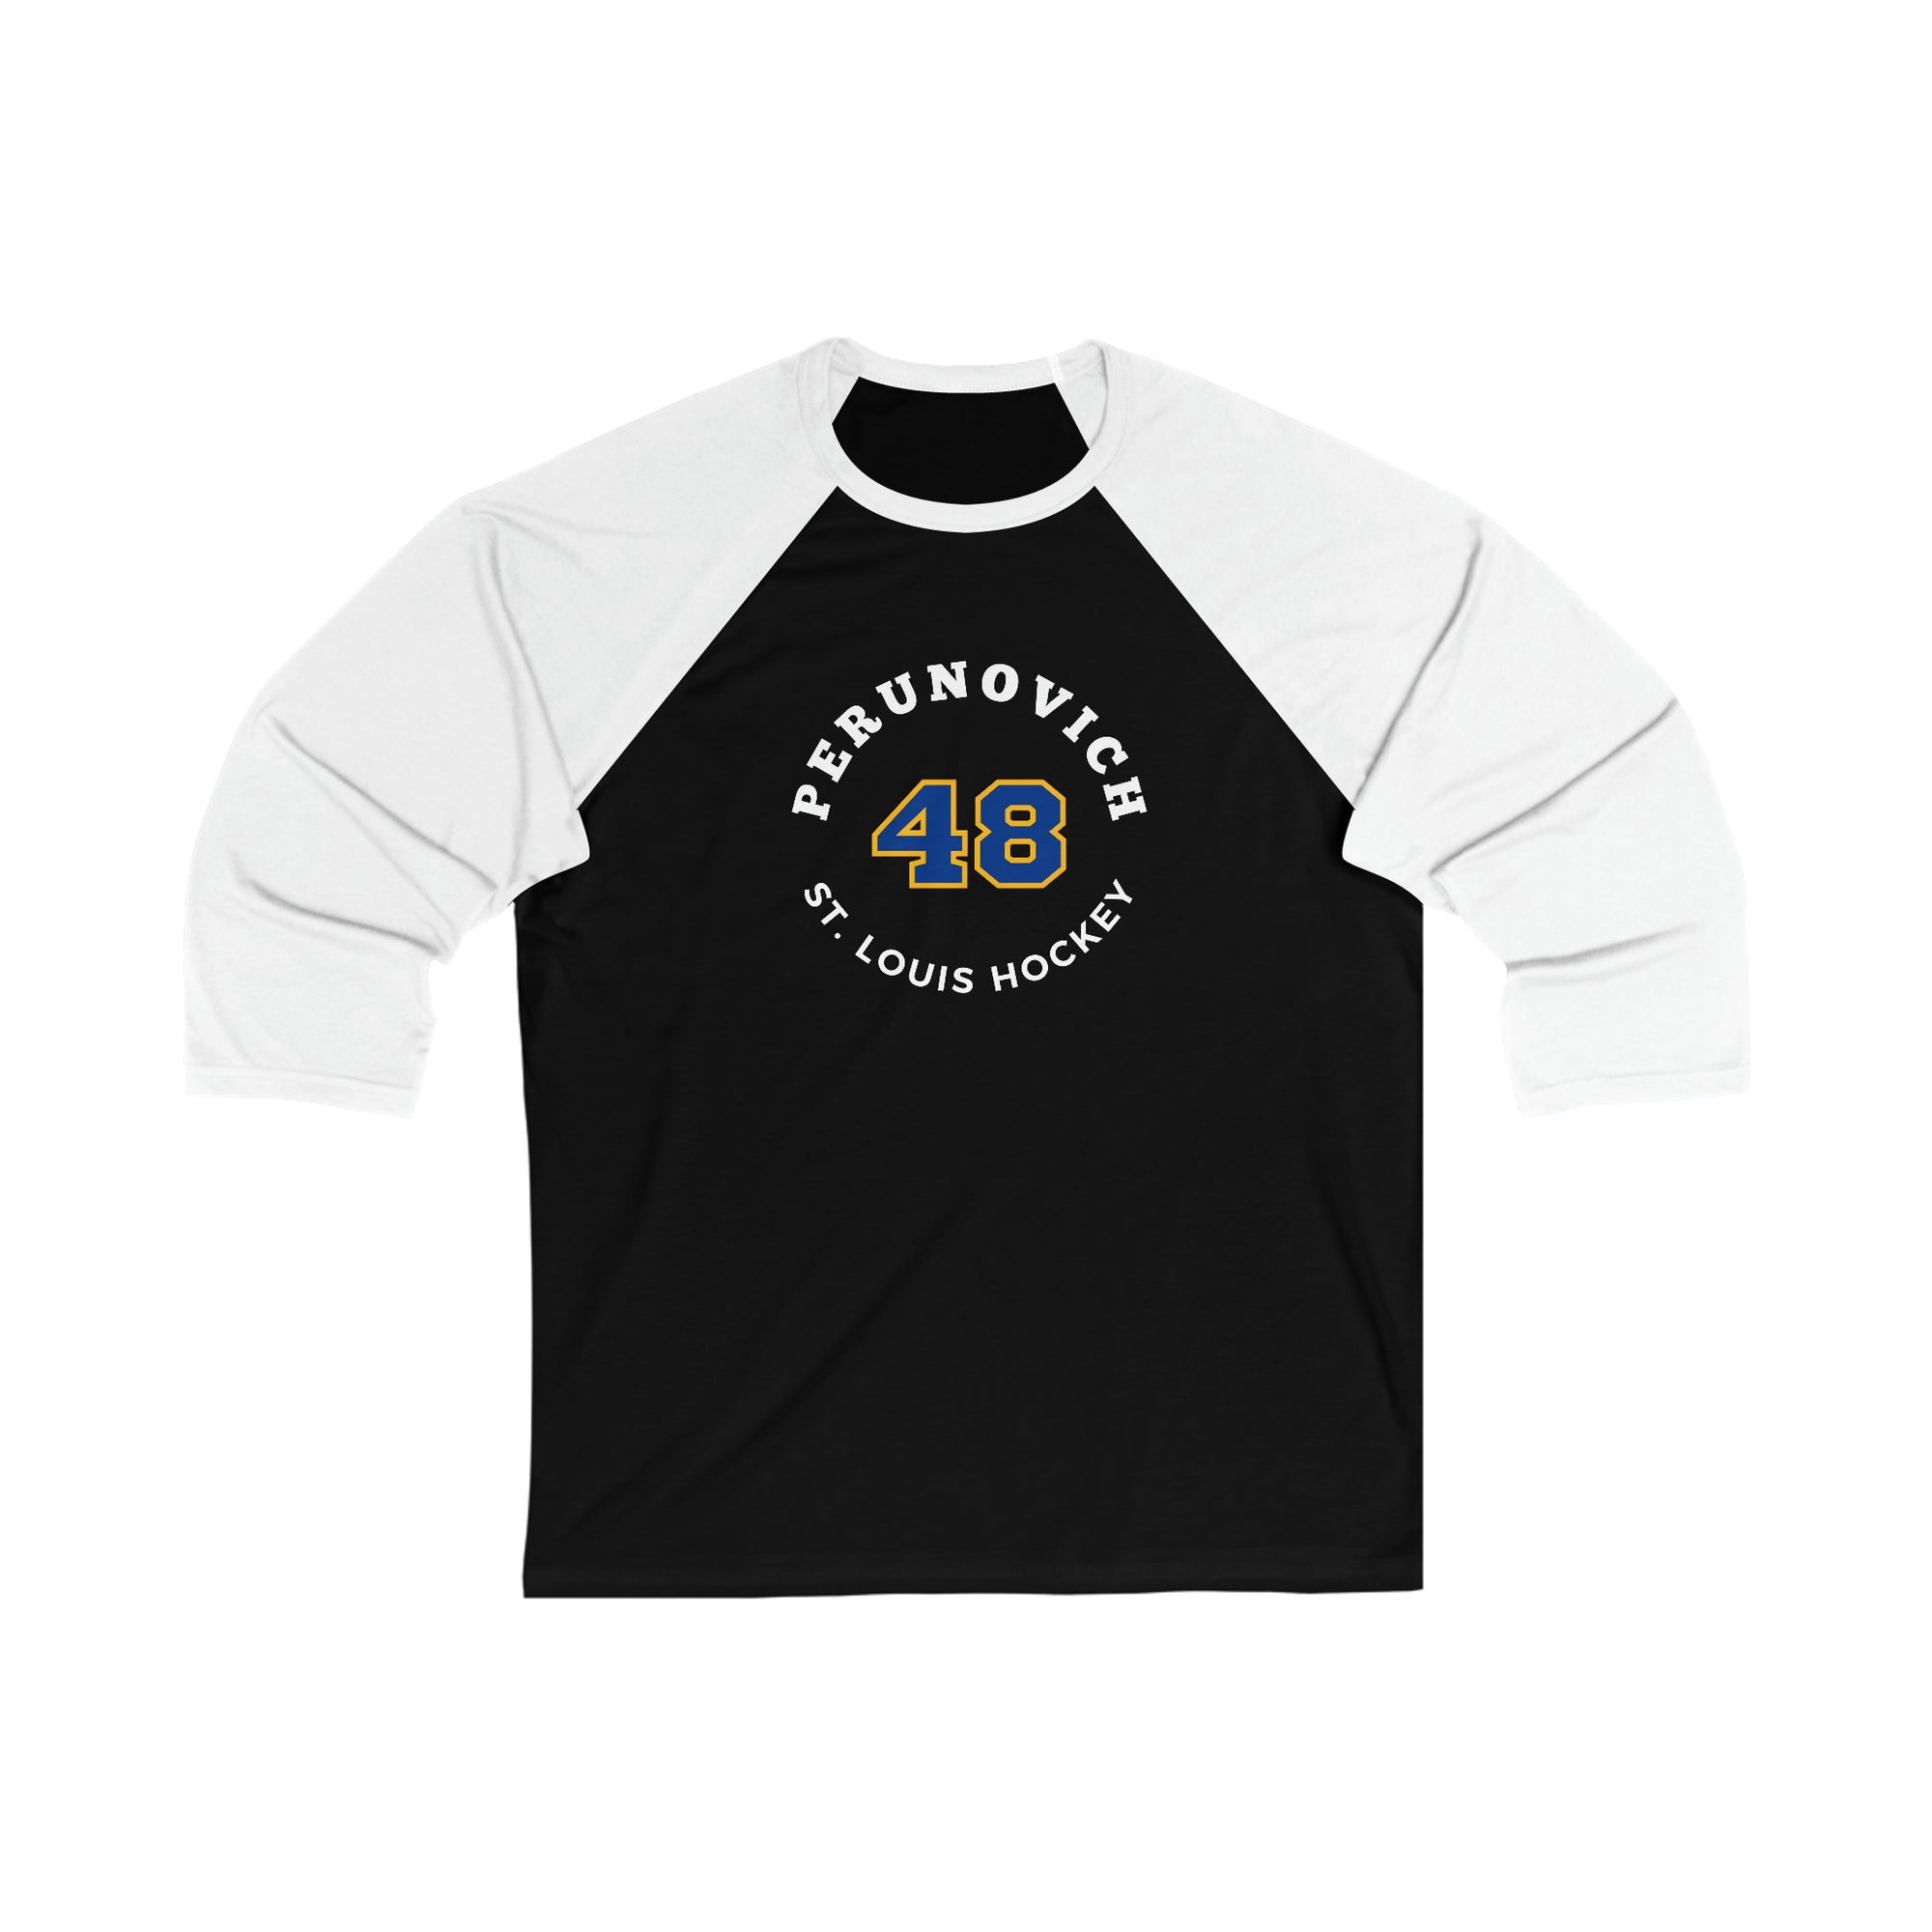 Perunovich 48 St. Louis Hockey Number Arch Design Unisex Tri-Blend 3/4 Sleeve Raglan Baseball Shirt